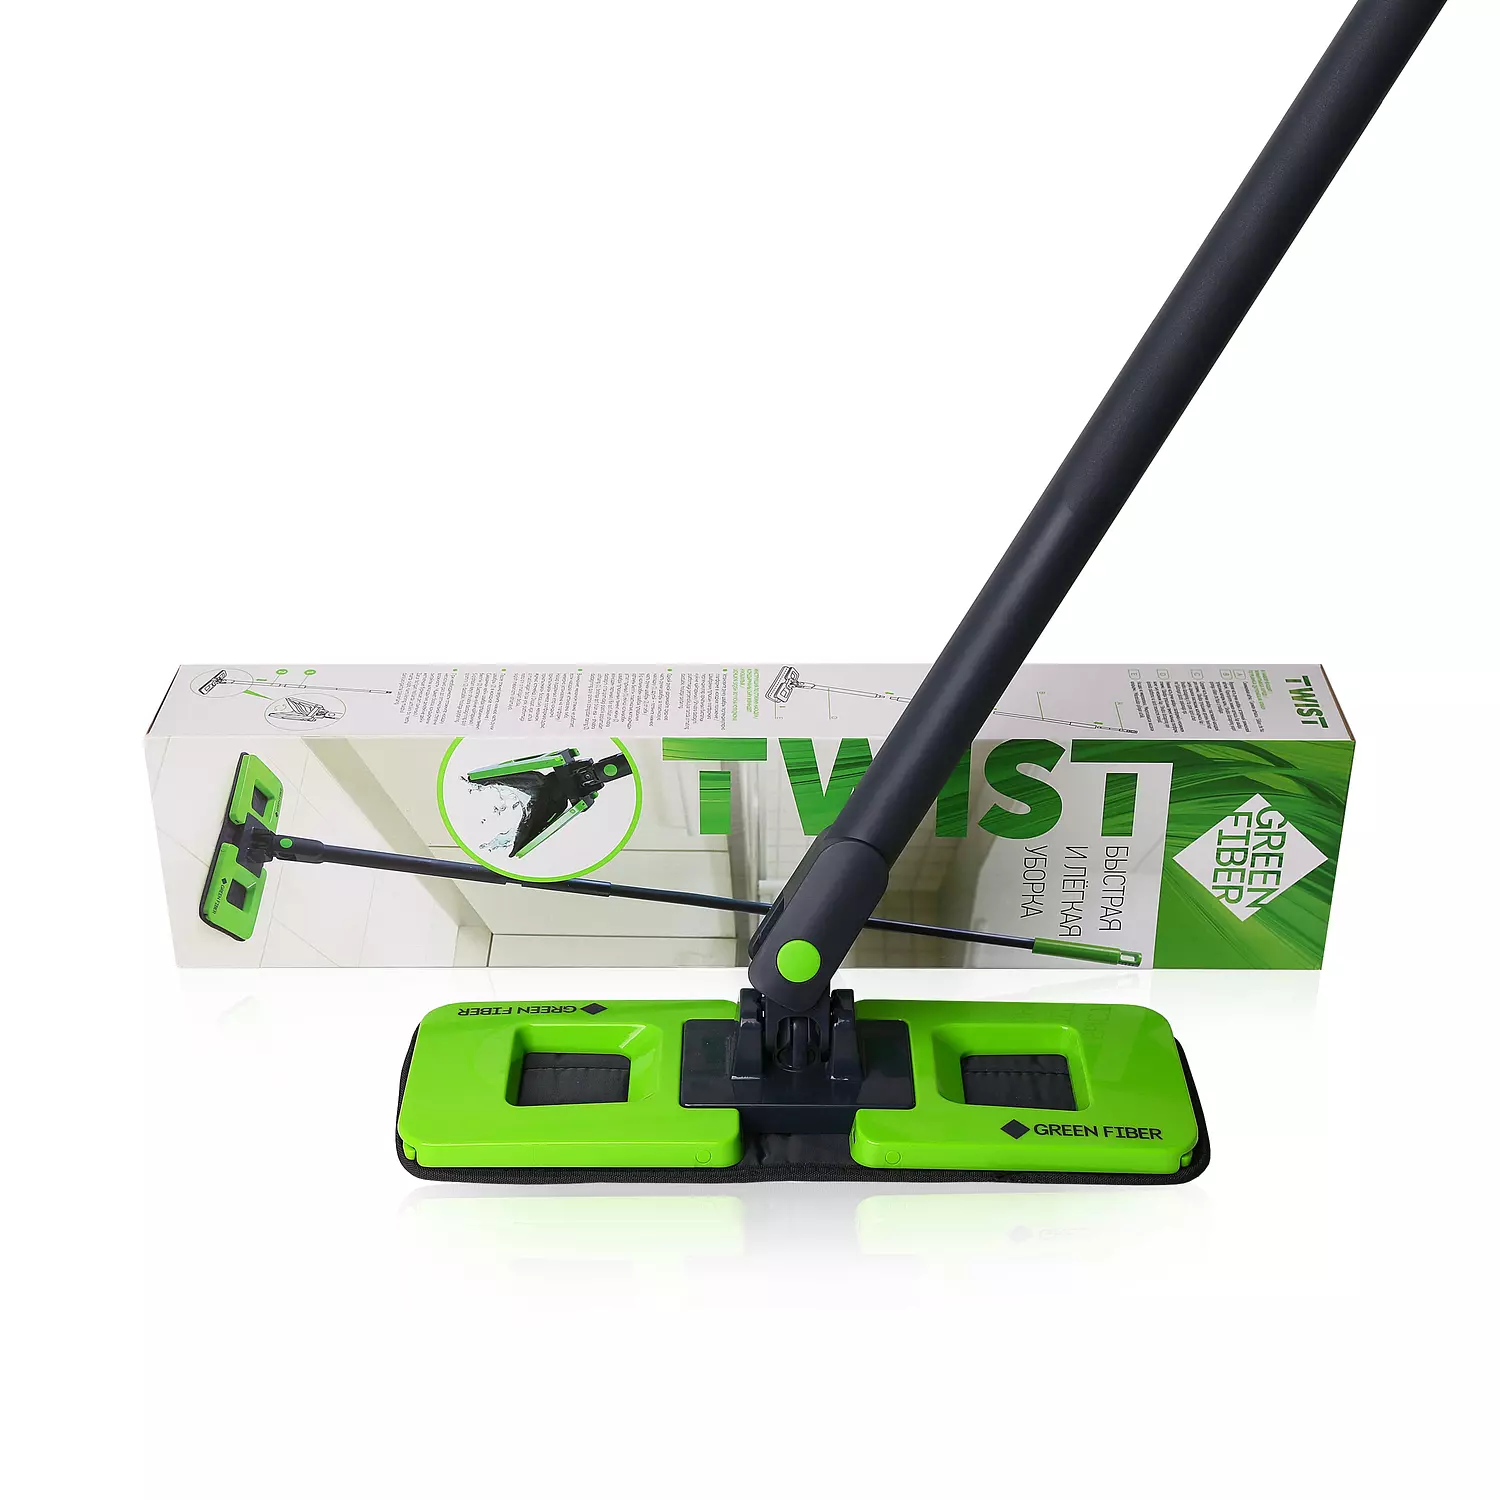 Green Fiber TWIST Squeeze Mop hover image